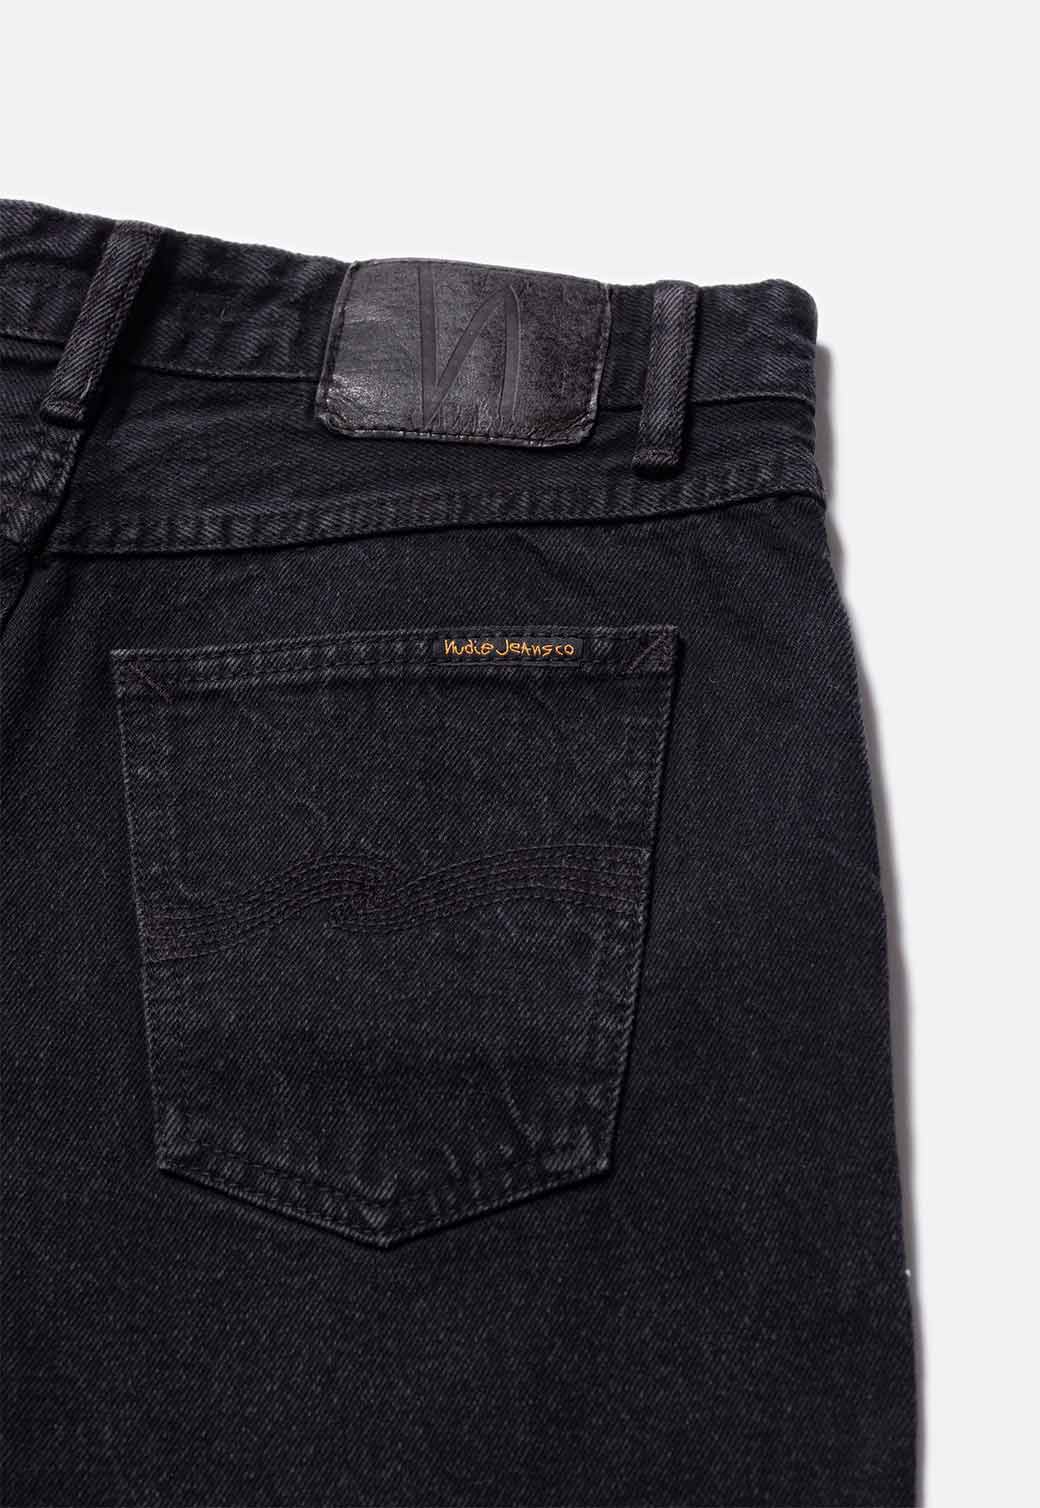 Black ג'ינס קצר לנשים Maud Shorts - Black Stone NUDIE